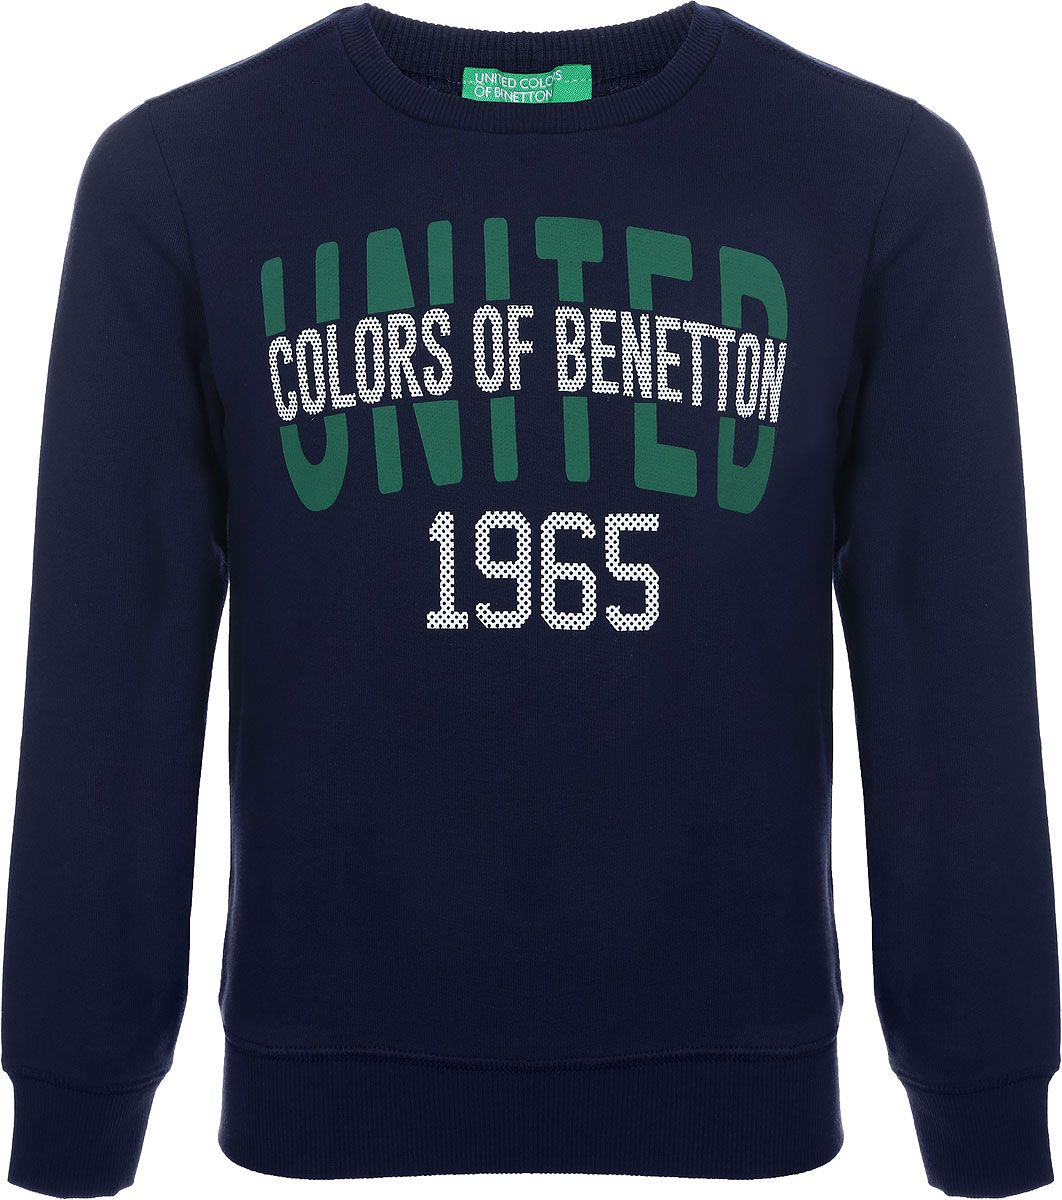    United Colors of Benetton, : -. 3J68C13ZU_13C.  L (140)